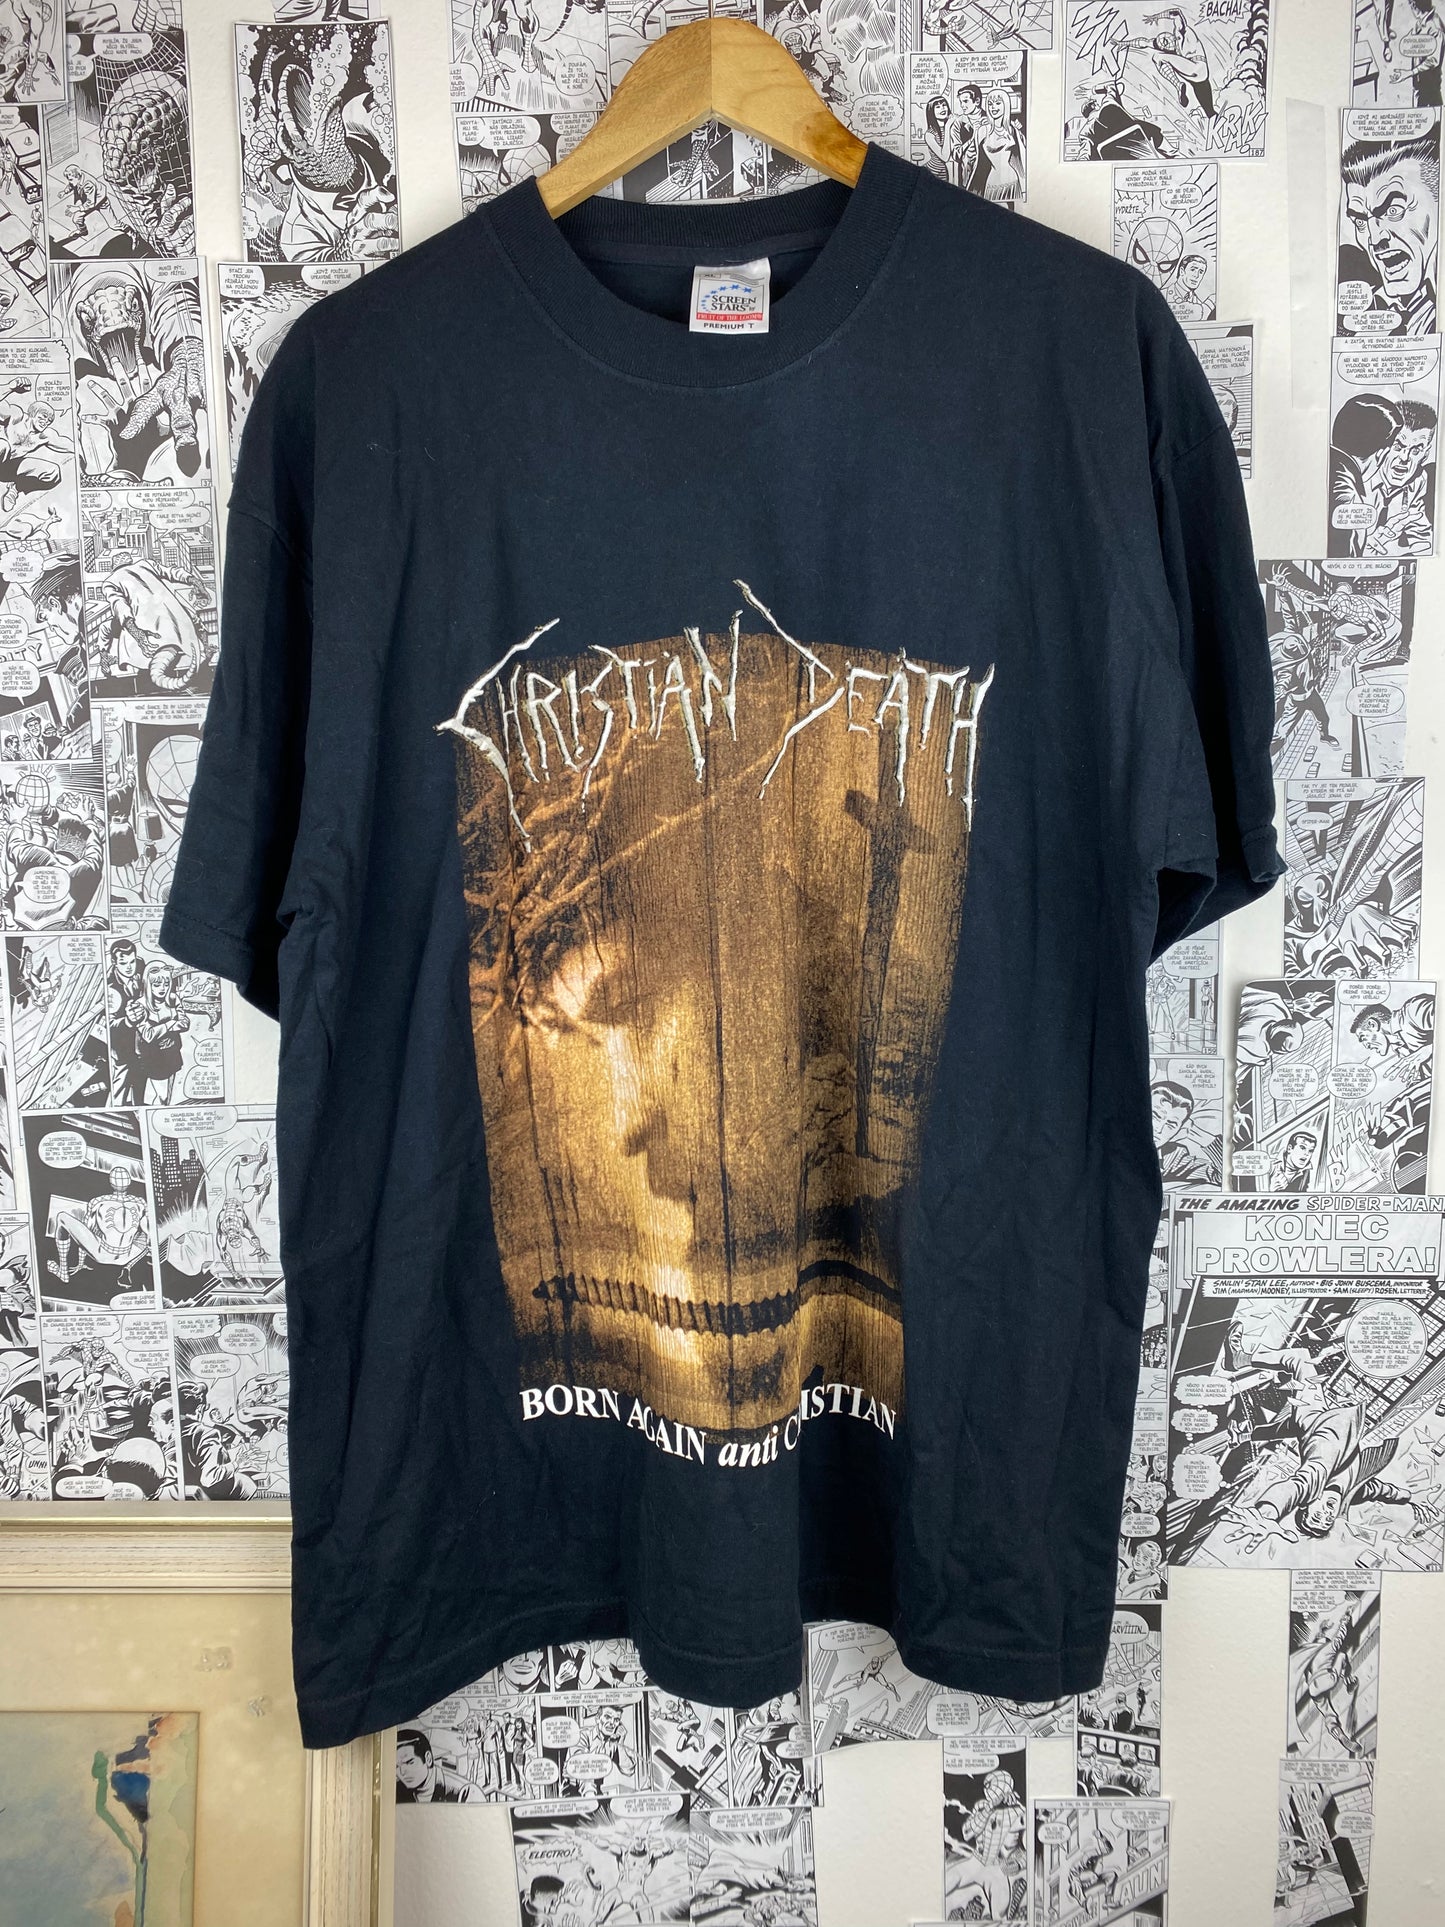 Vintage Christian Death “Born Again Anti-Christian” t-shirt - size XL